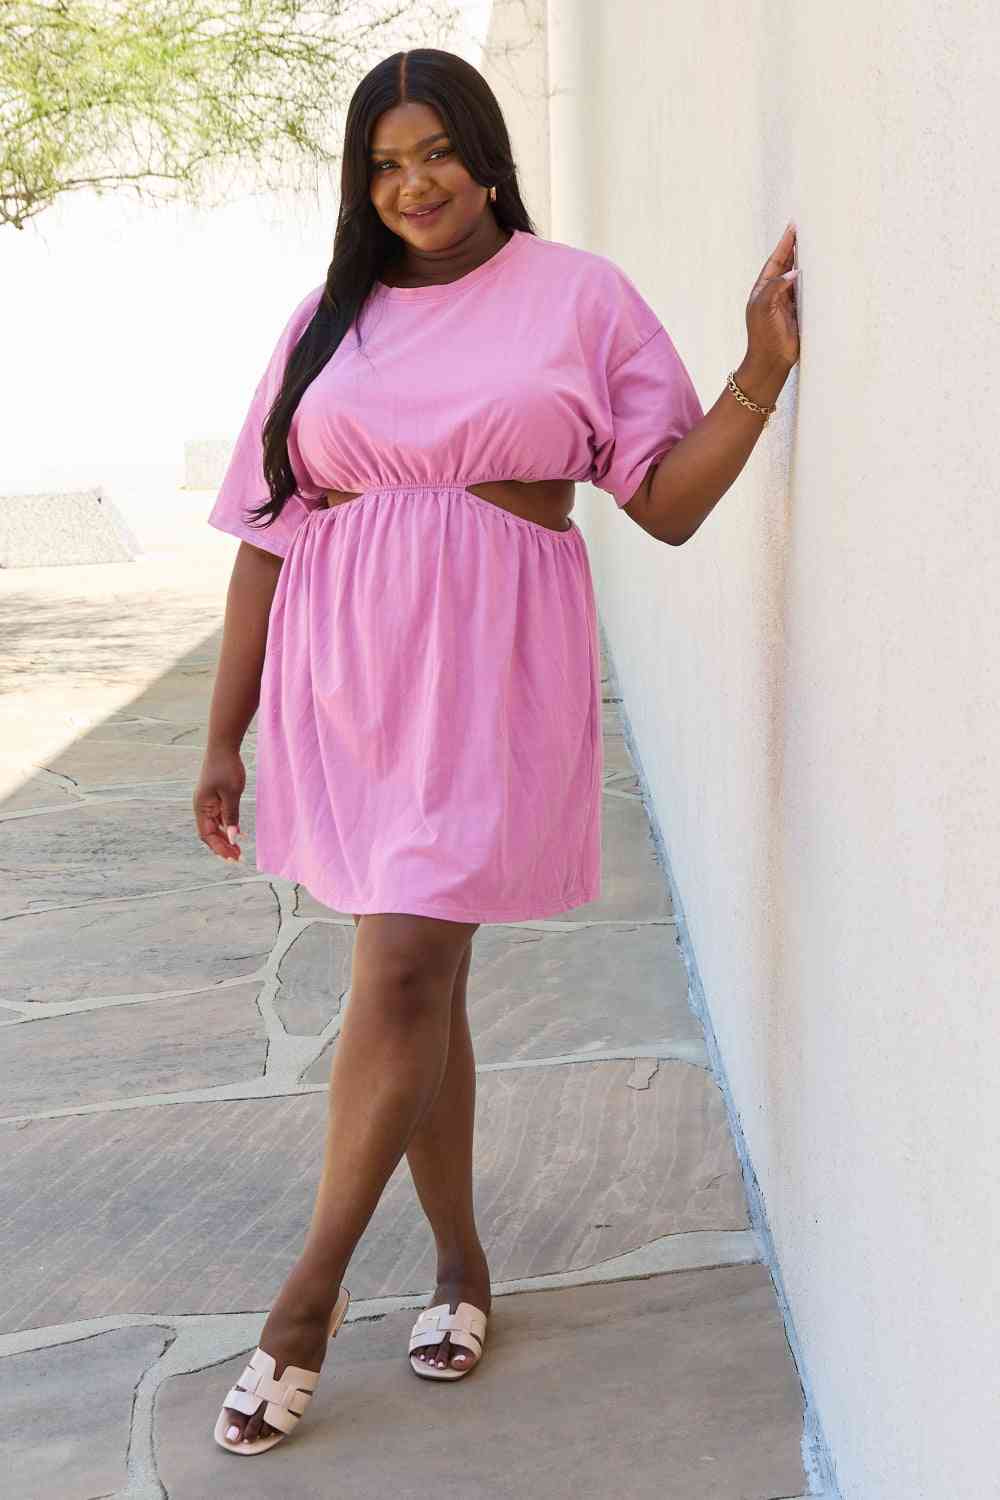 HEYSON Summer Field Full Size Cutout T-Shirt Dress in Carnation Pink - Cheeky Chic Boutique